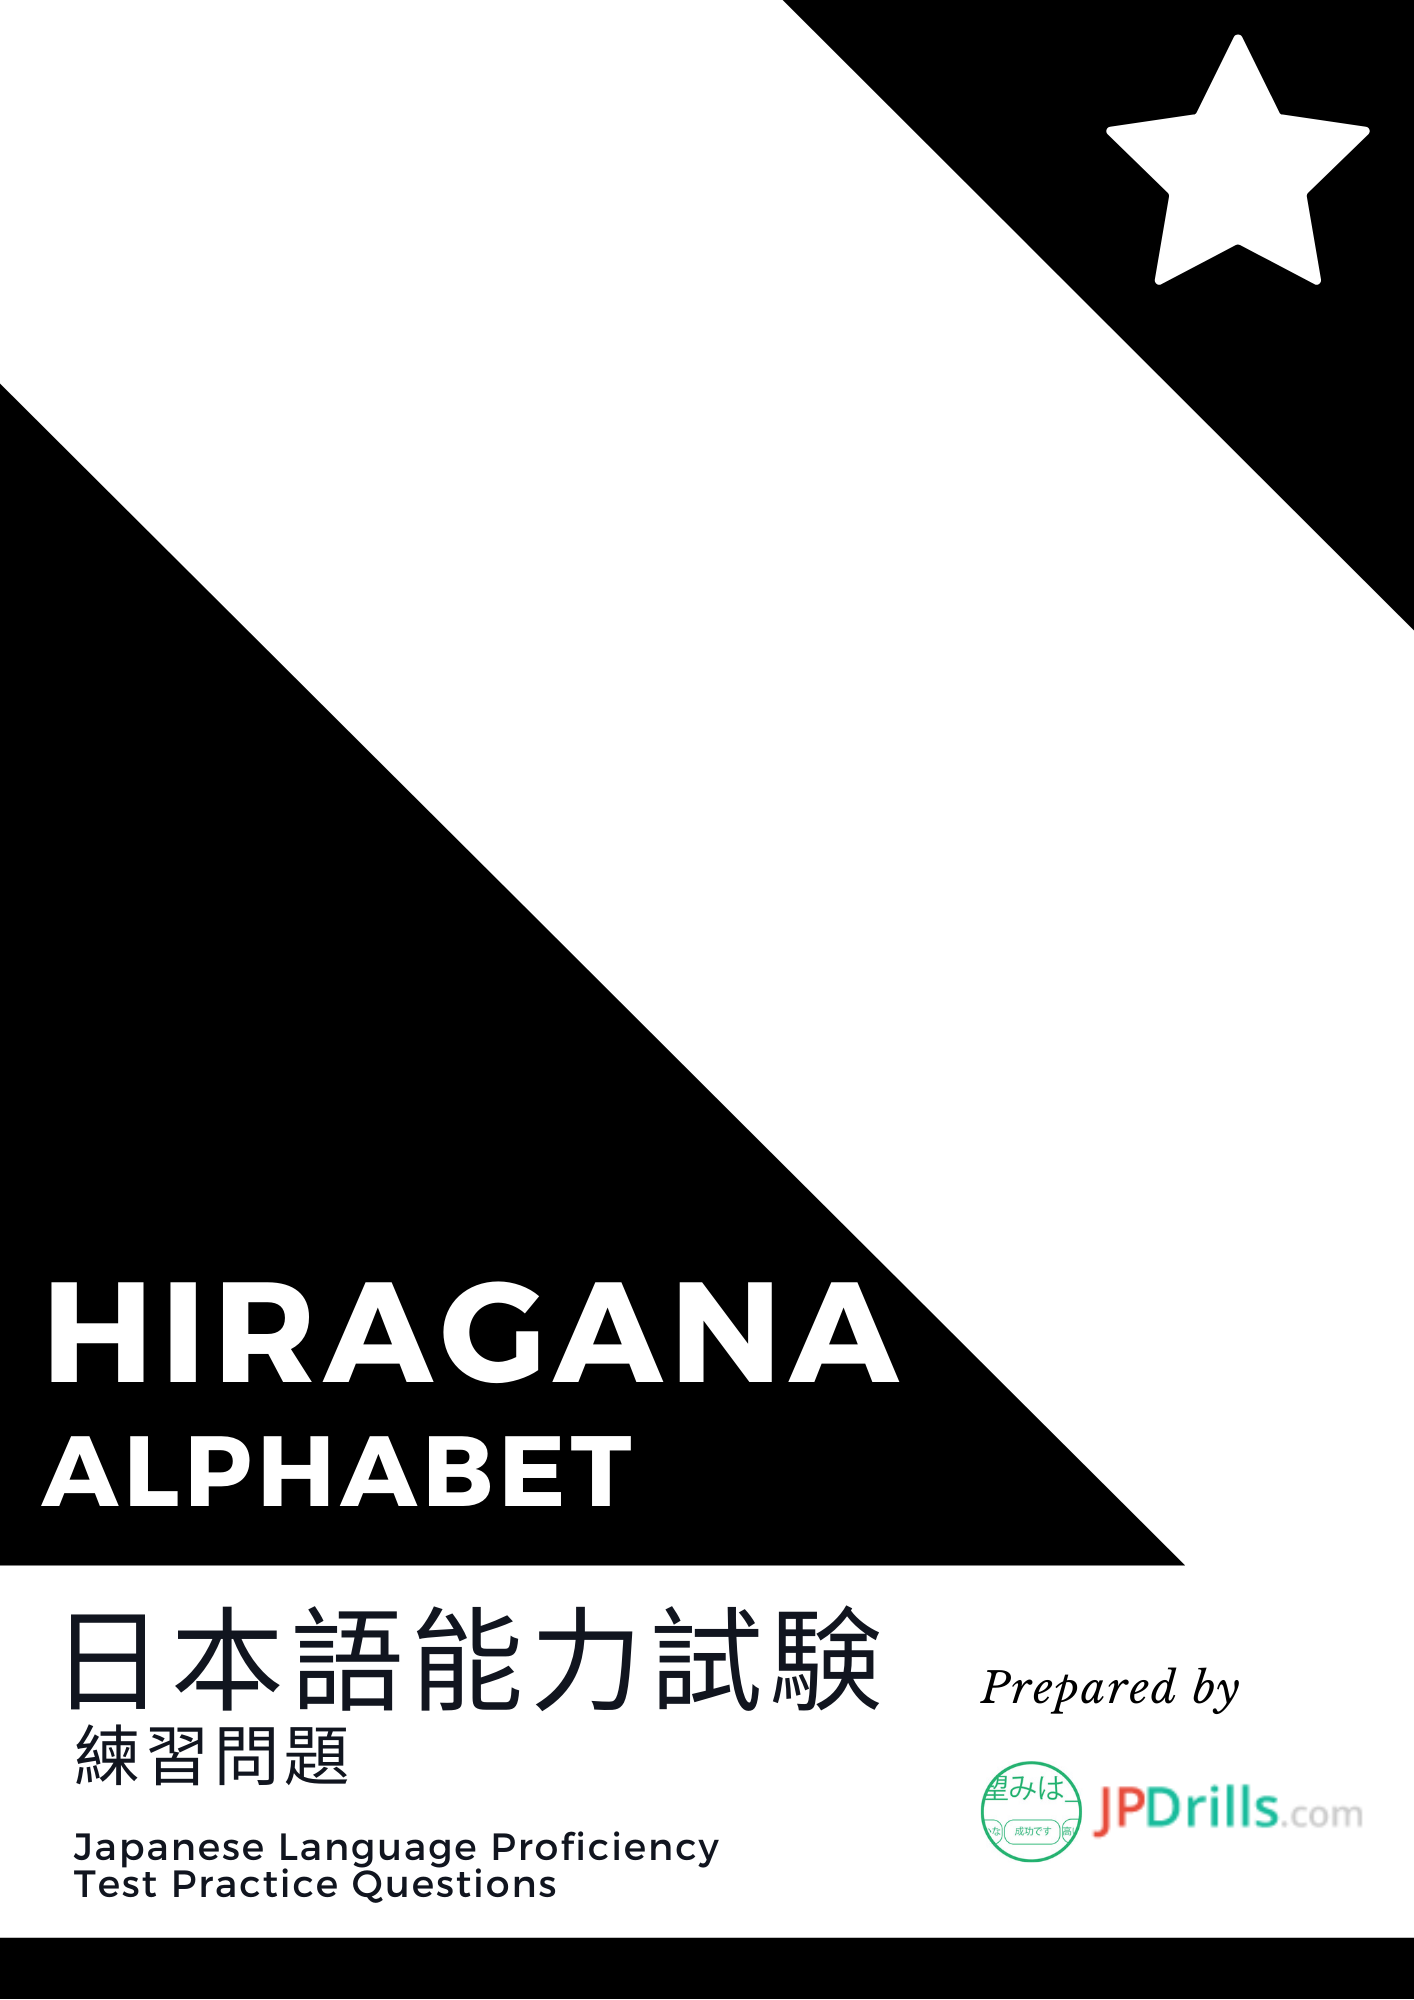 Hiragana Japanese Alphabet quiz logo